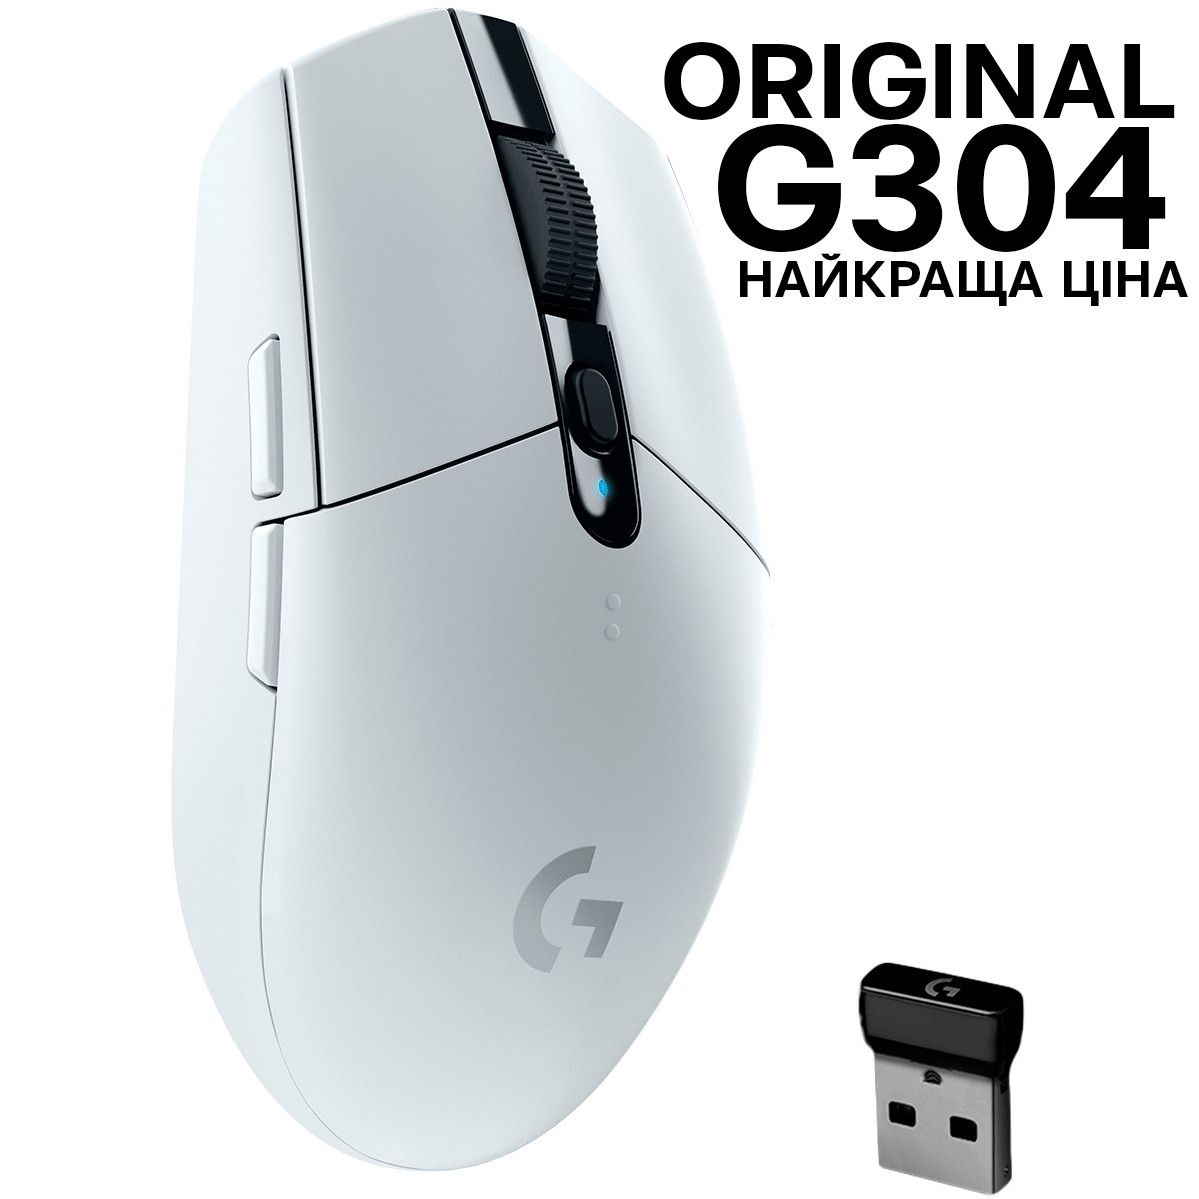 ОРИГІНАЛ Logitech G304 Wireless White (910-005295) азійська версія G305 (910-005291)